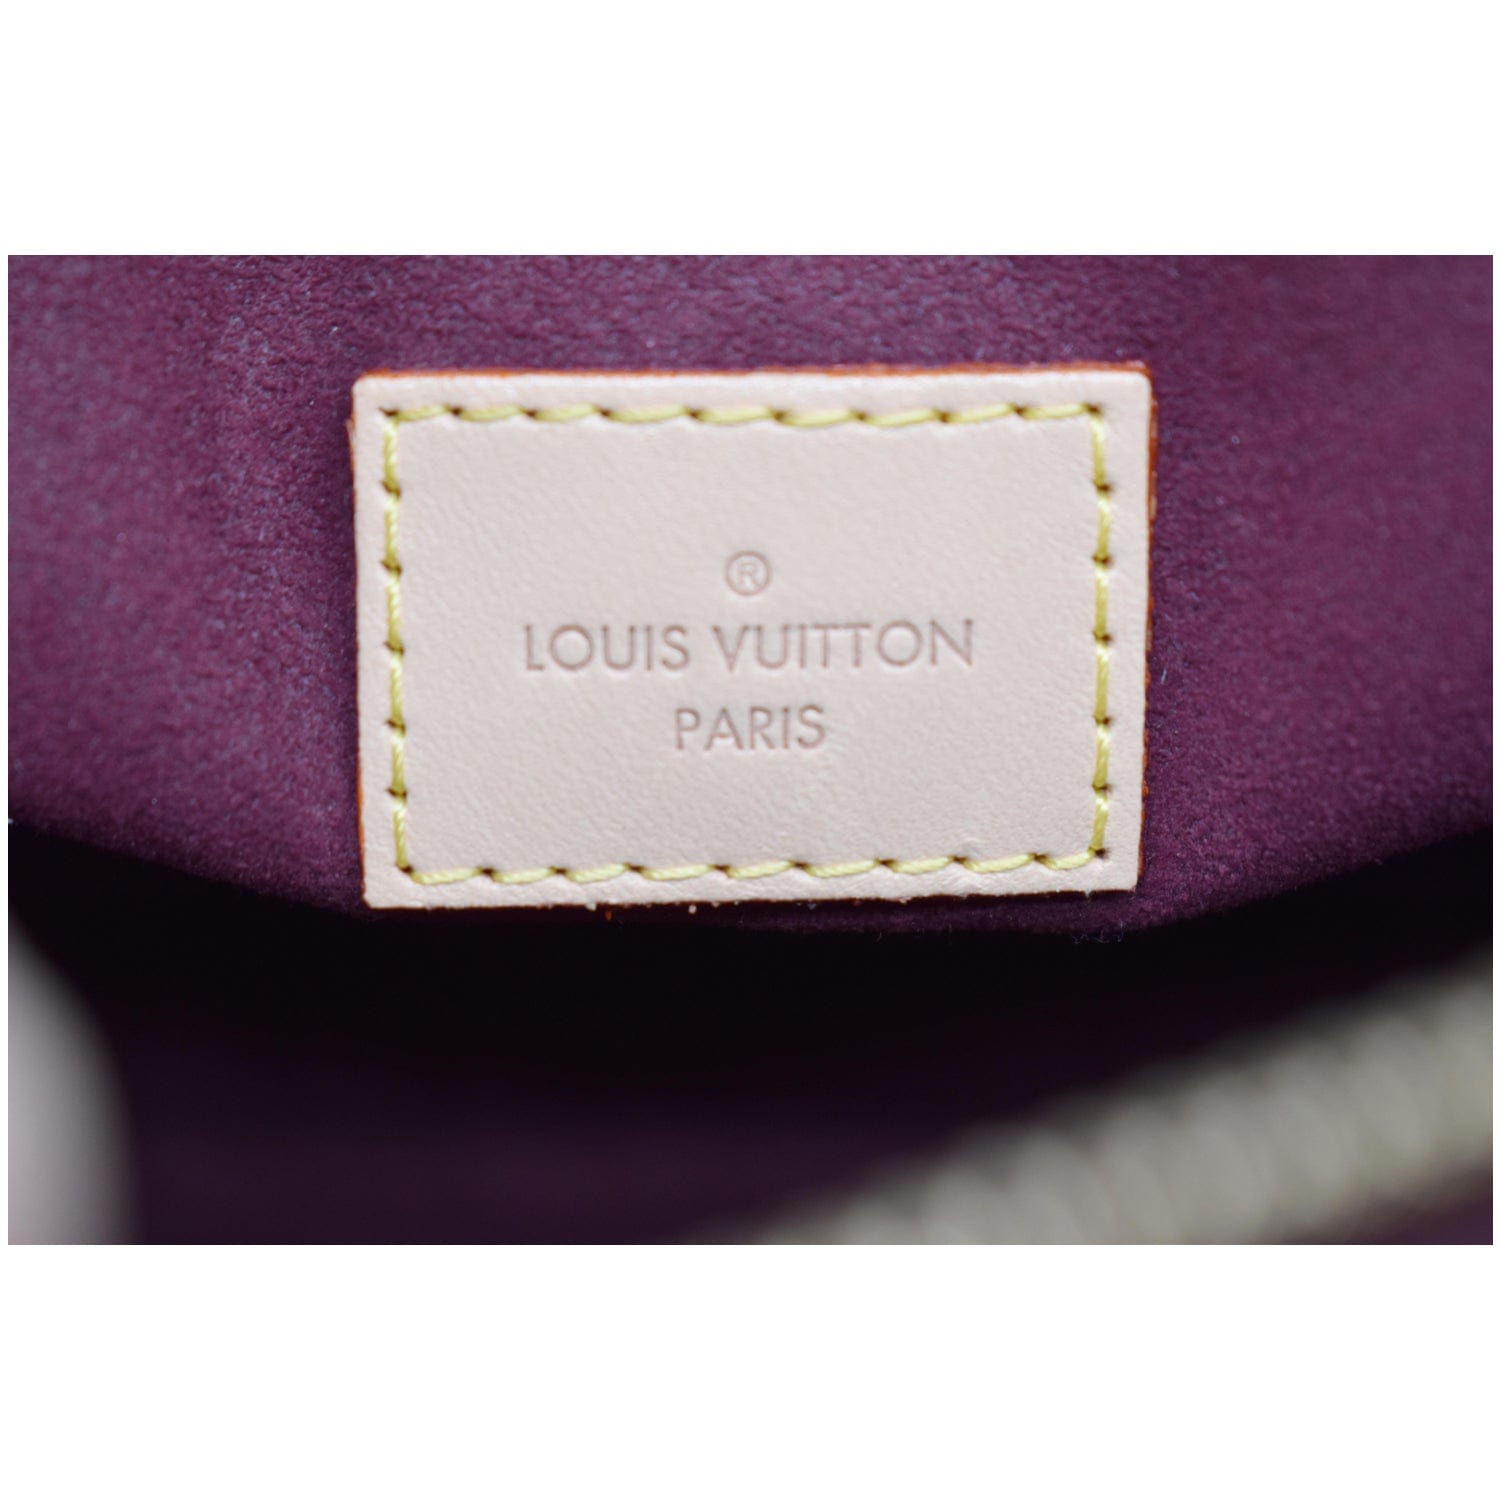 Soufflot handbag Louis Vuitton Black in Synthetic - 34666551